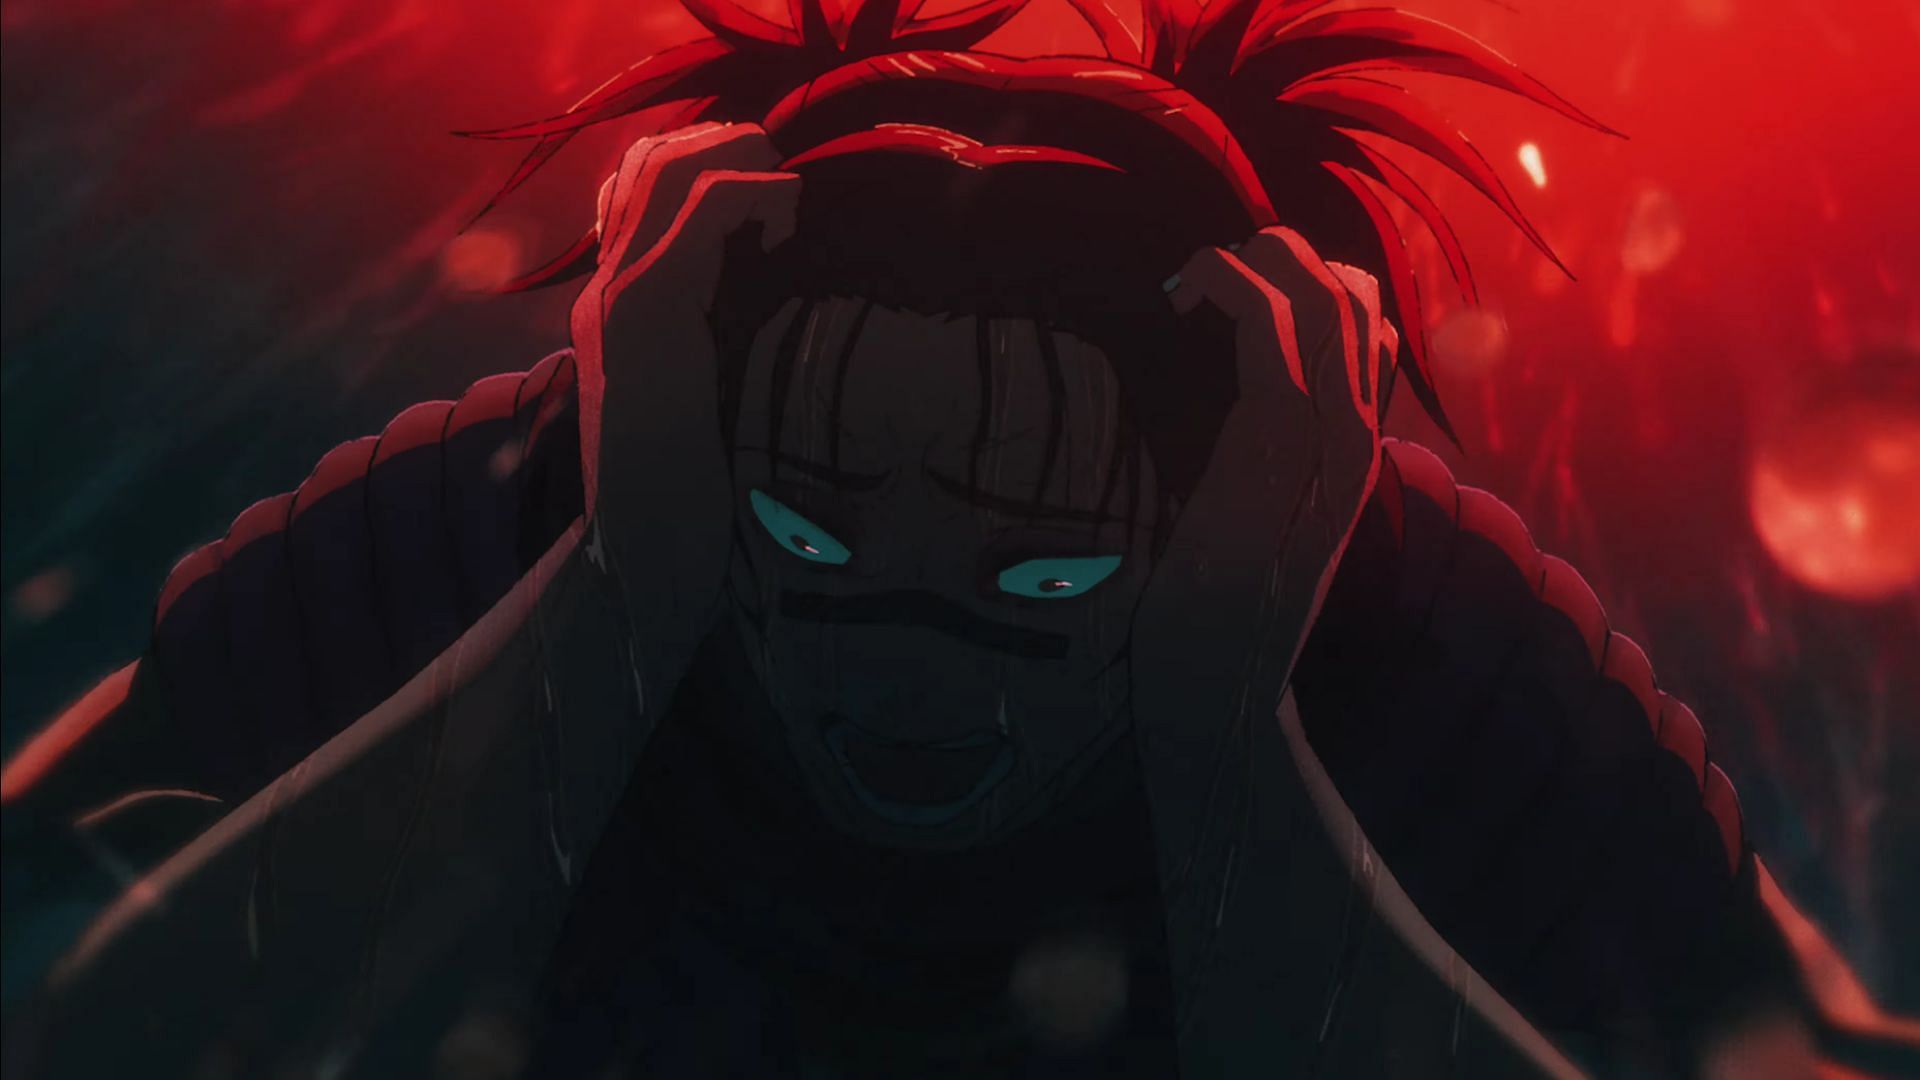 Choso as shown in the anime (Image via Studio MAPPA)